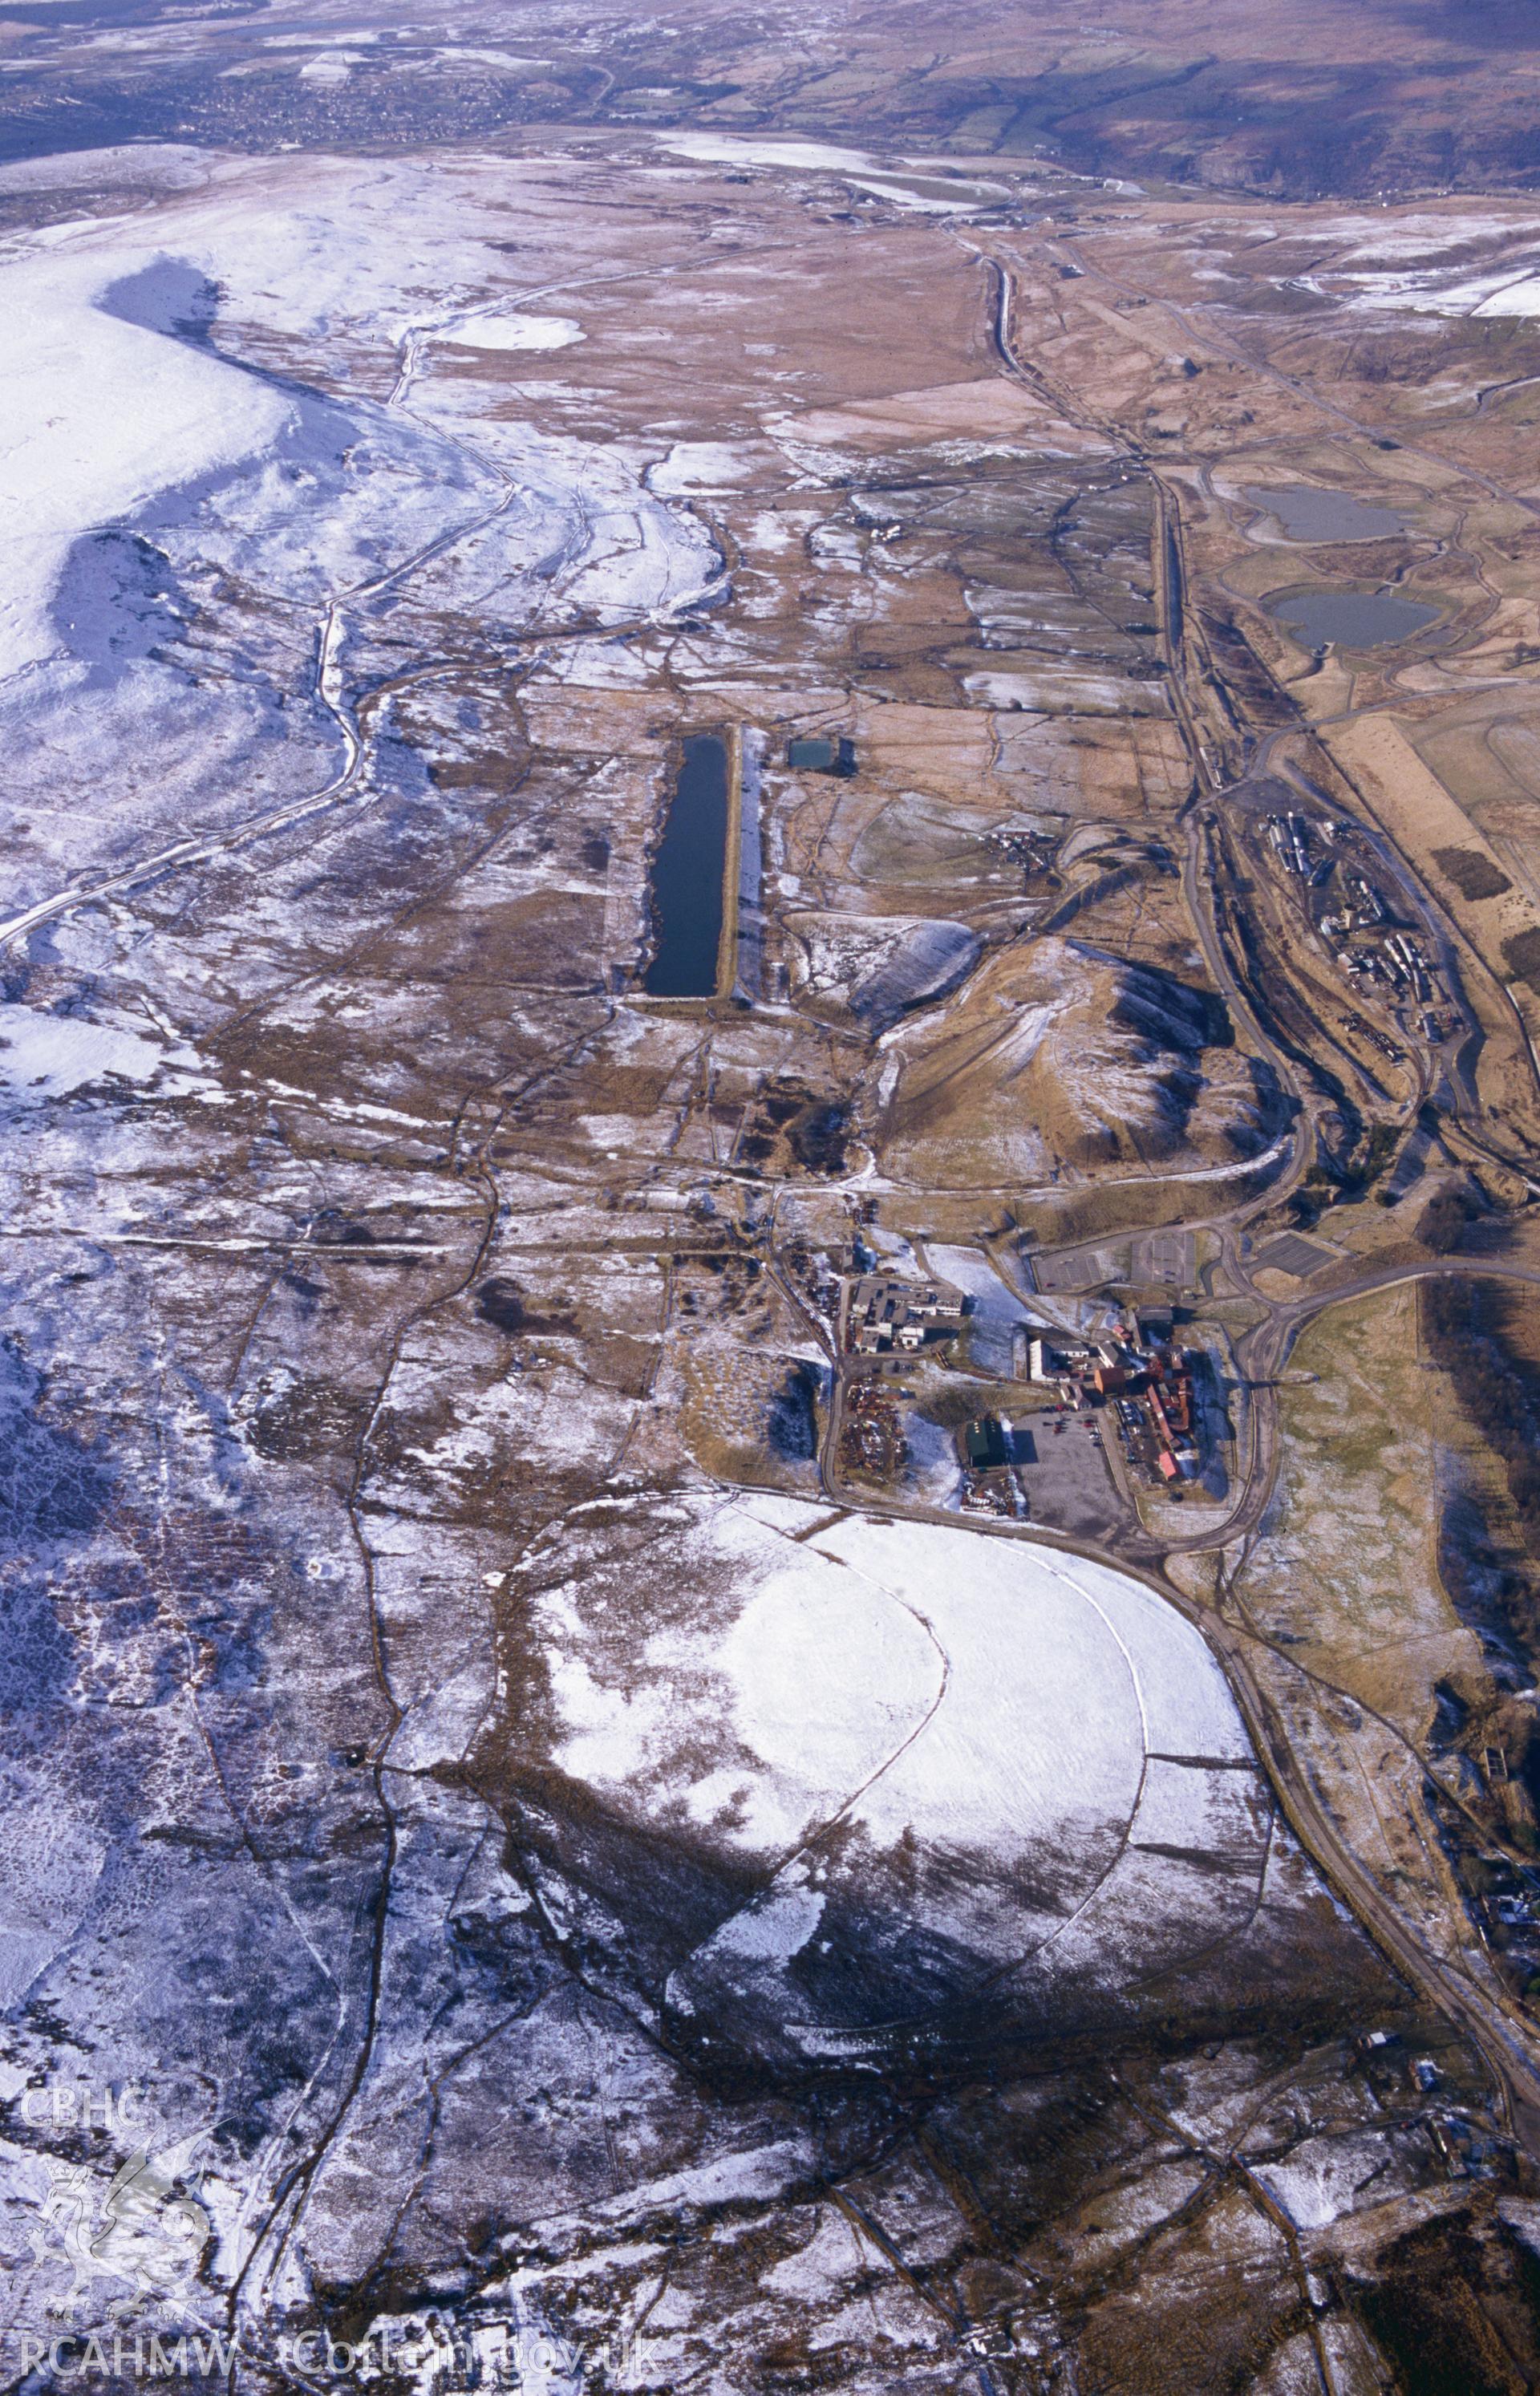 Slide of RCAHMW colour oblique aerial photograph showing a winter landscape view of Big Pit, taken by T.G. Driver, 2001.